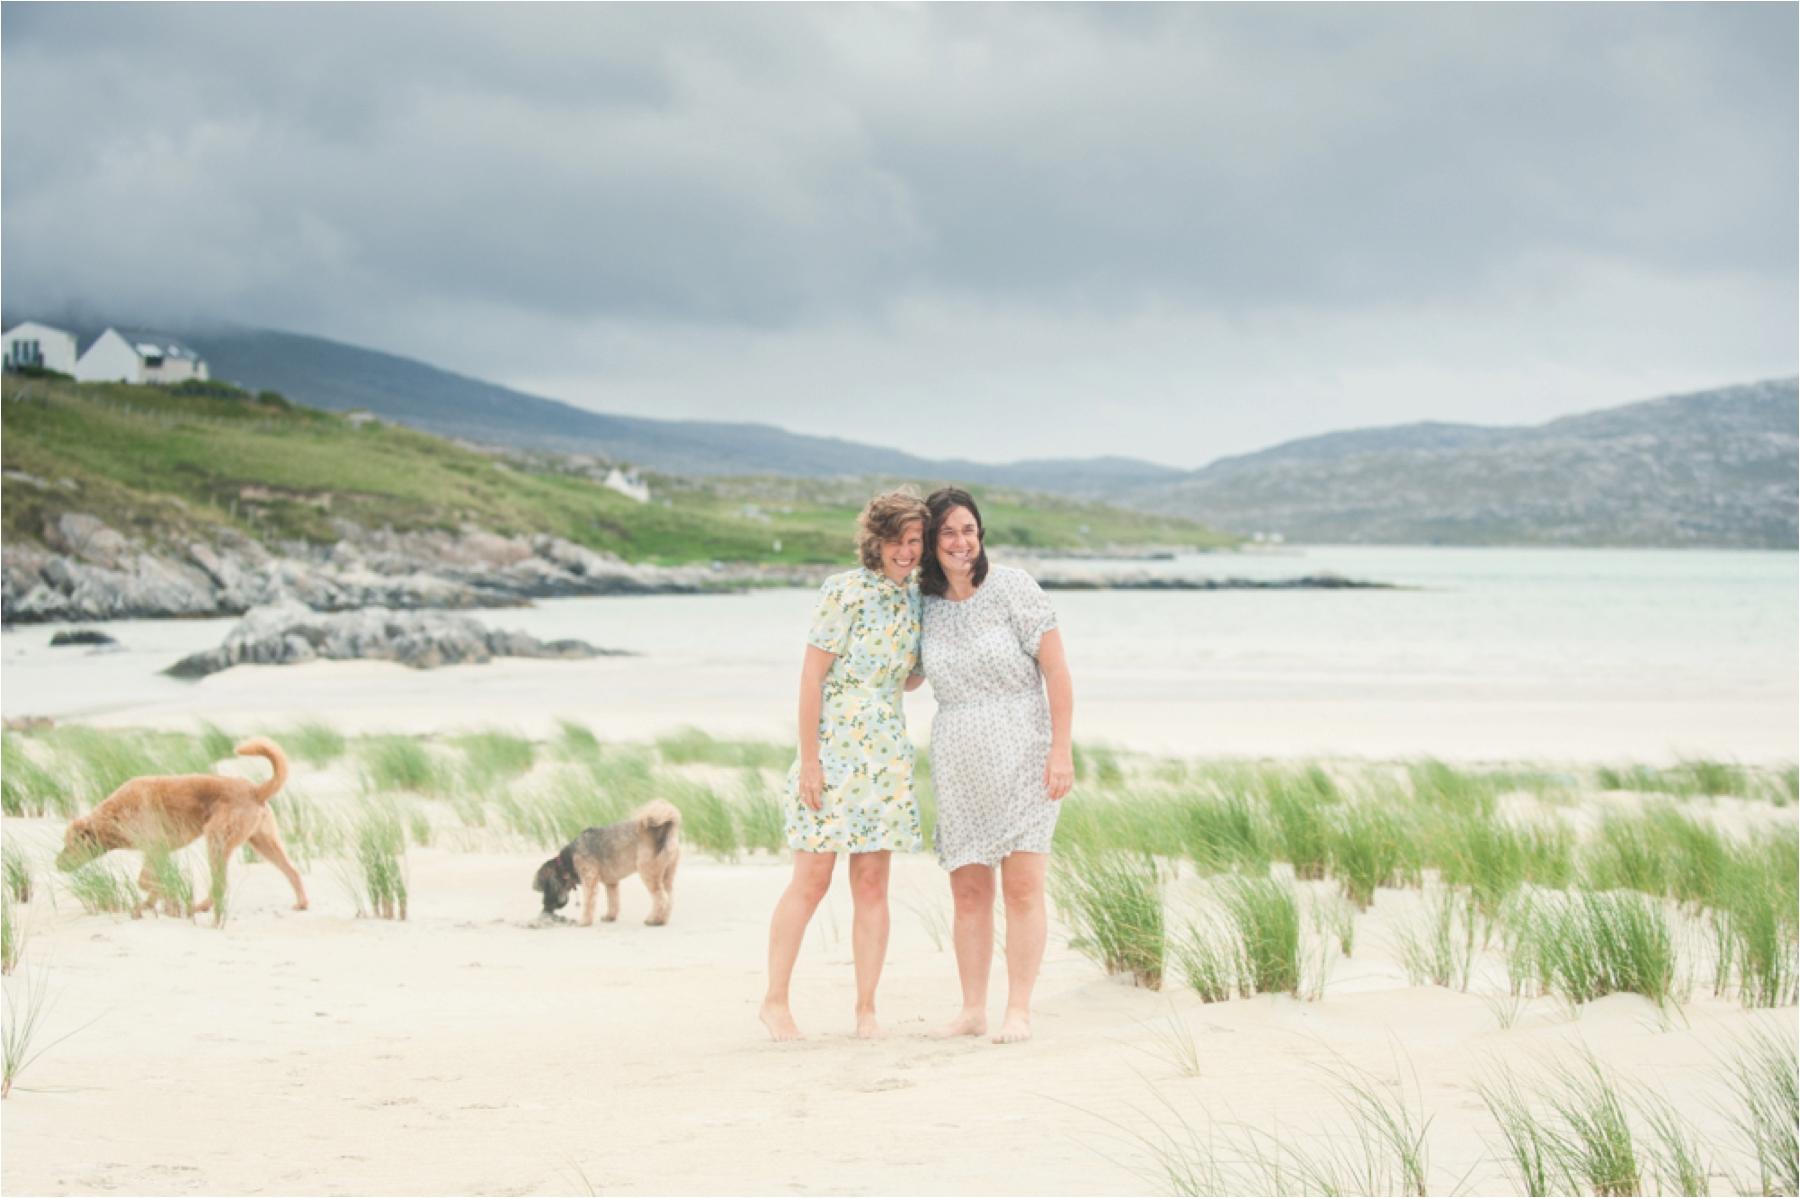 Siestke & Paula’s elopement on the Isle of Harris